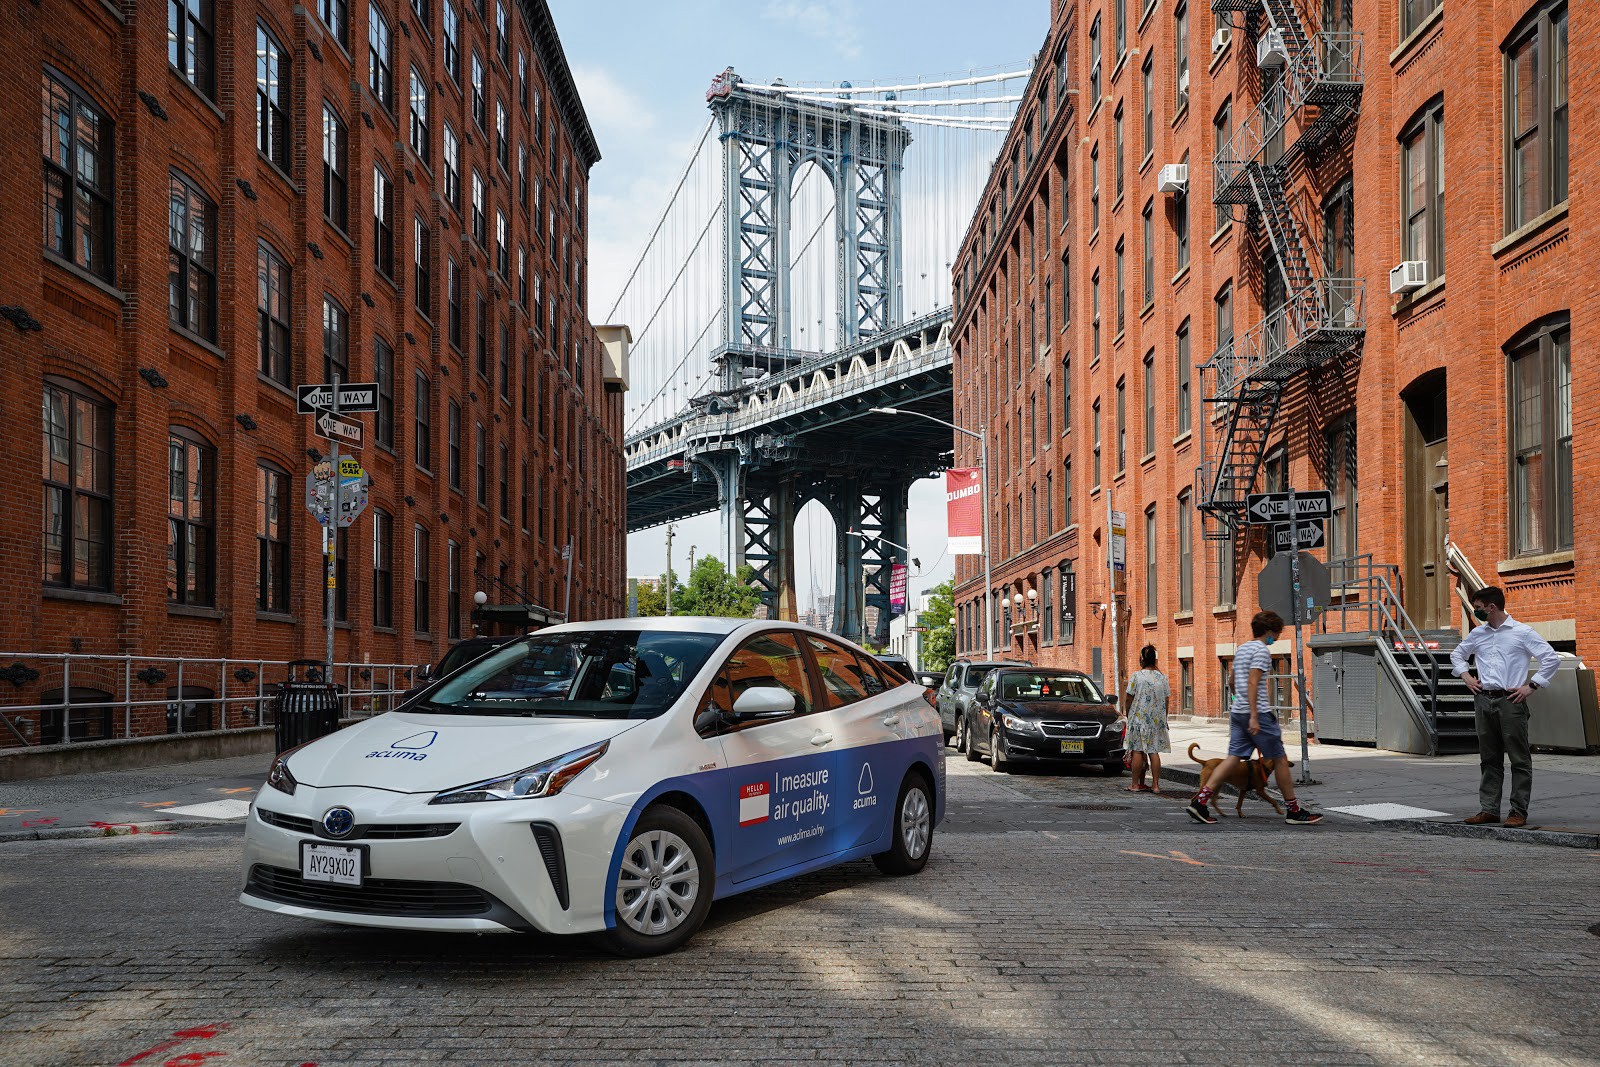 aclima-mobile-air-quality-sensing-vehicle-brooklyn-new-york-jpg